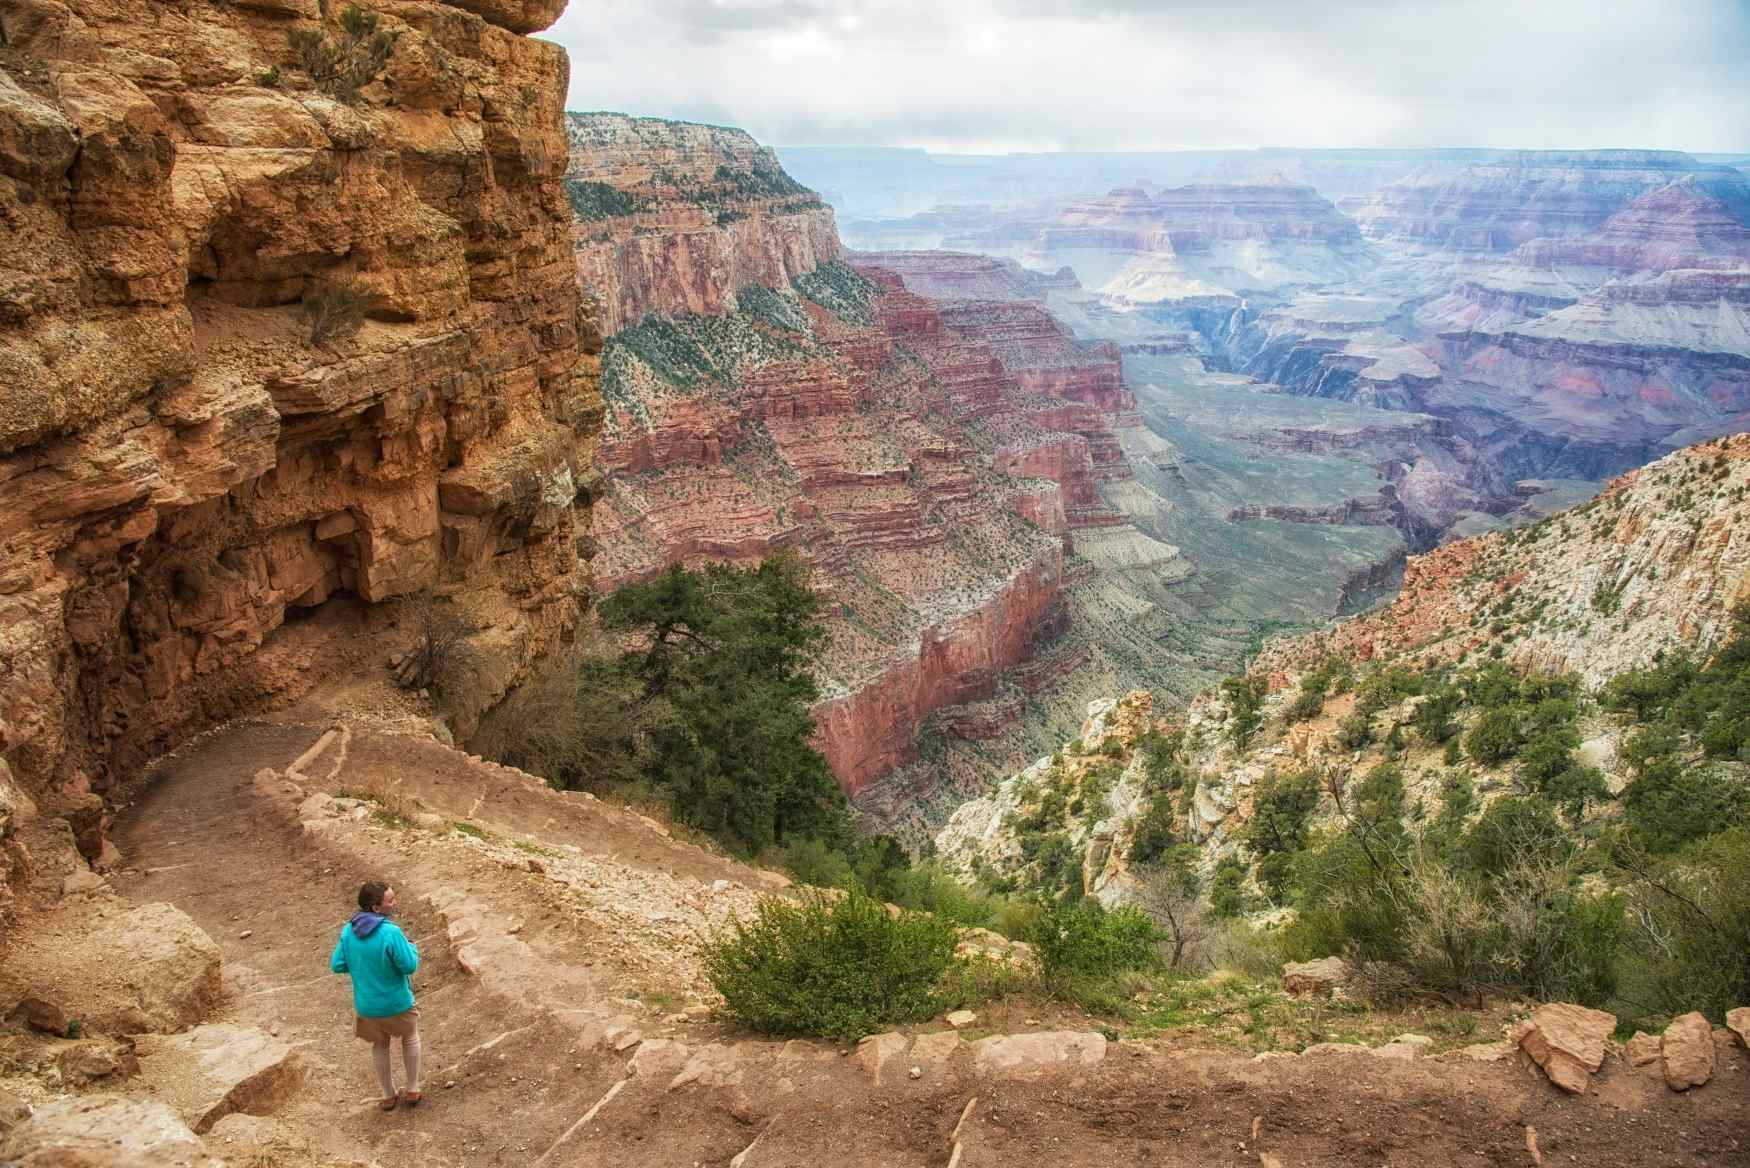 Hiker on Kaibab trail, south rim, Grand Canyon national park, Arizona
Shutterstock: 139303736